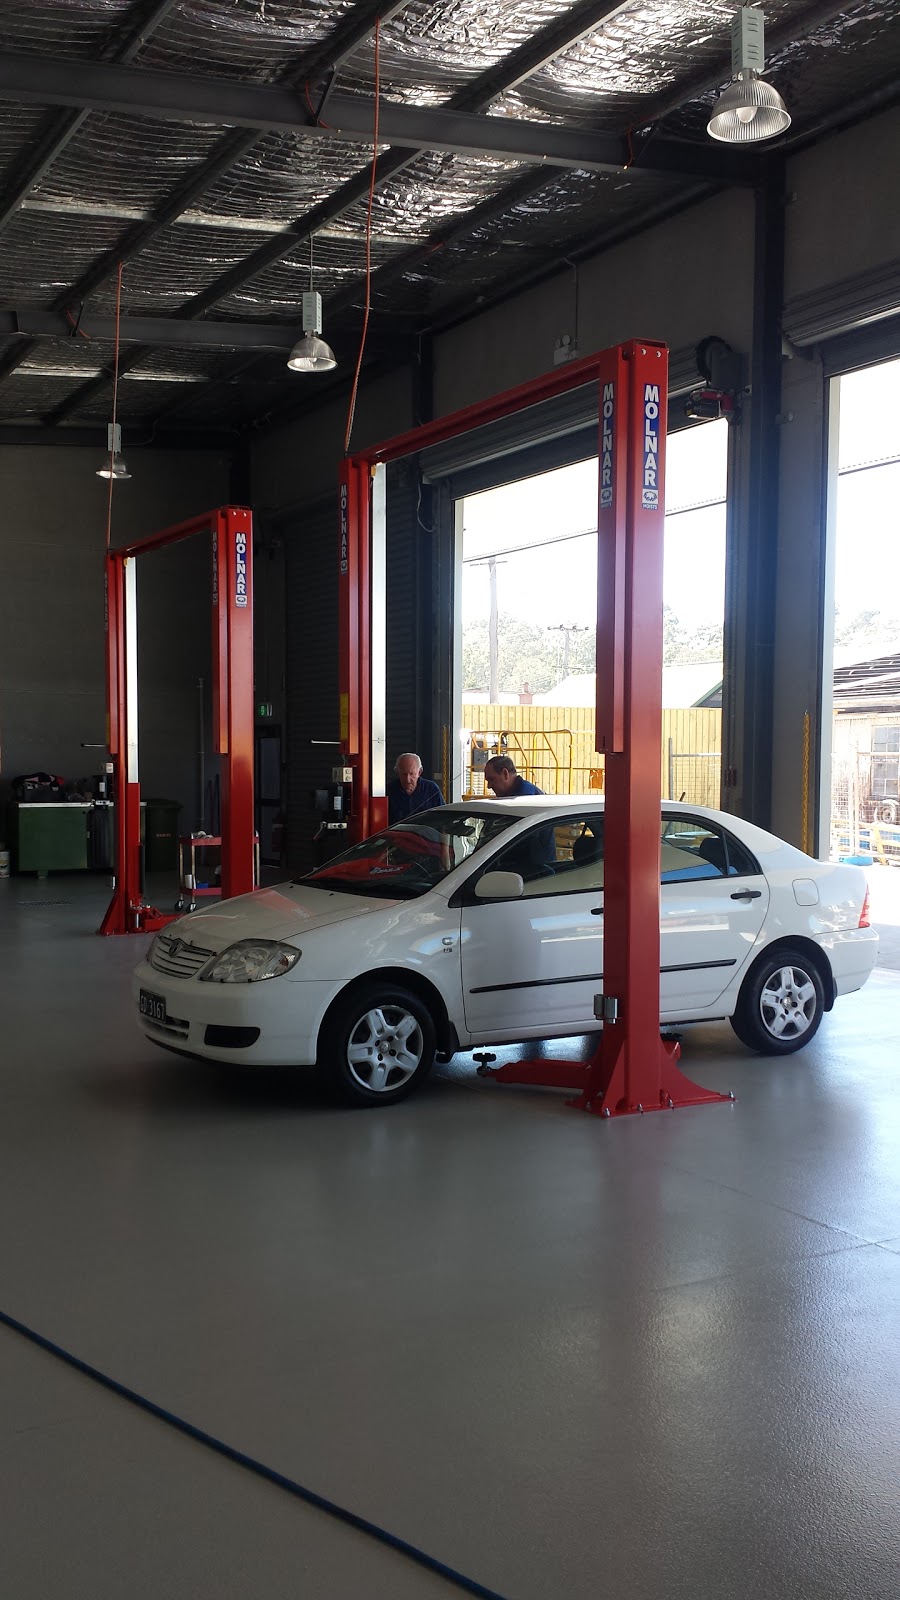 Goodwins Automotive | car repair | 210 Wollombi Rd, Cessnock NSW 2325, Australia | 0249901595 OR +61 2 4990 1595